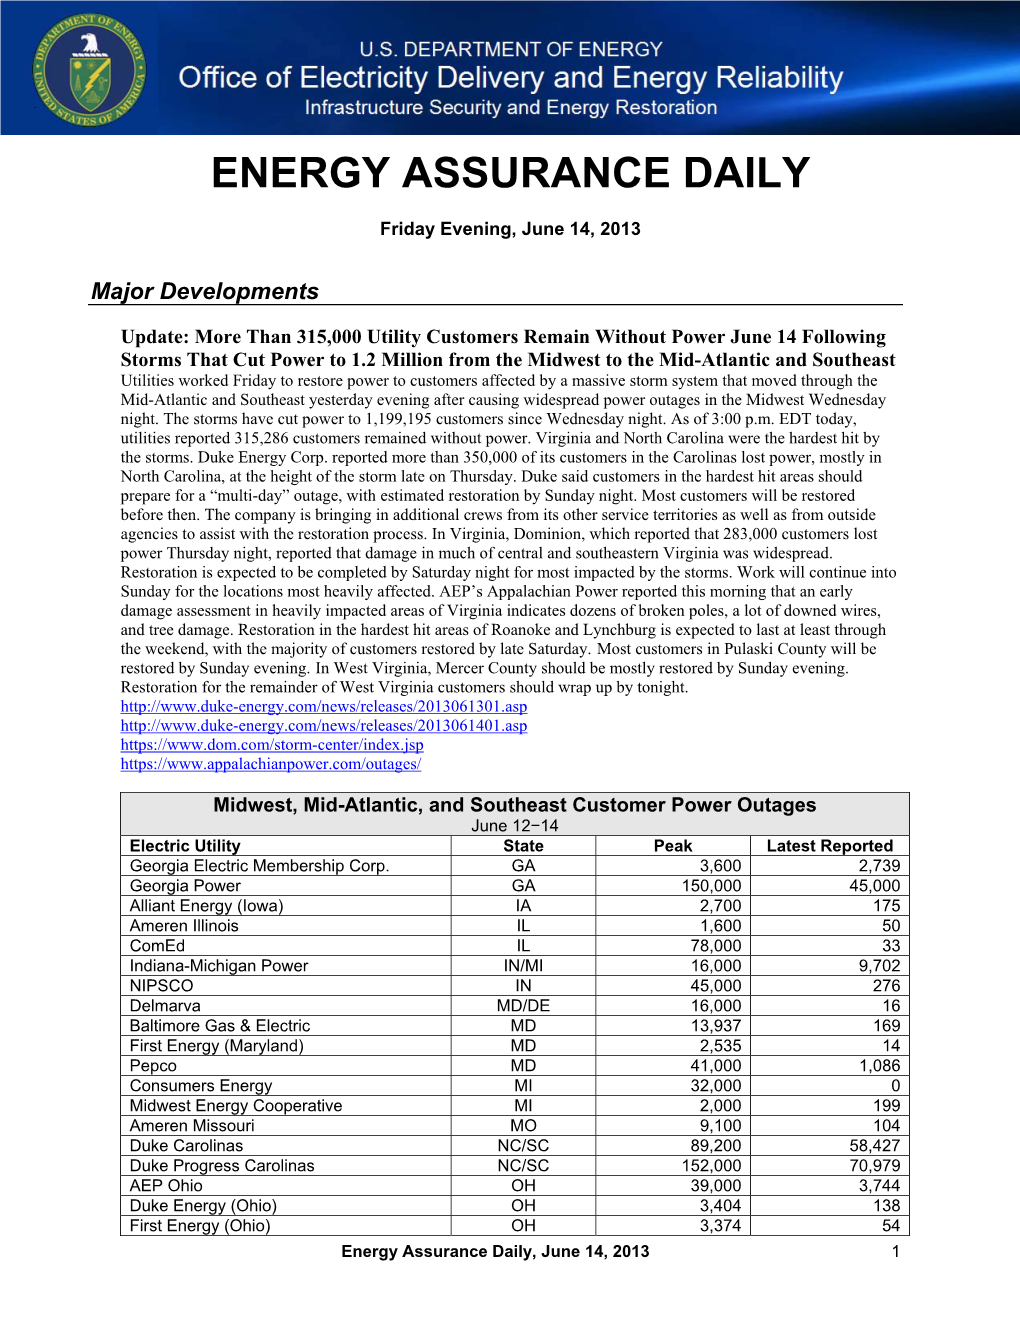 Energy Assurance Daily